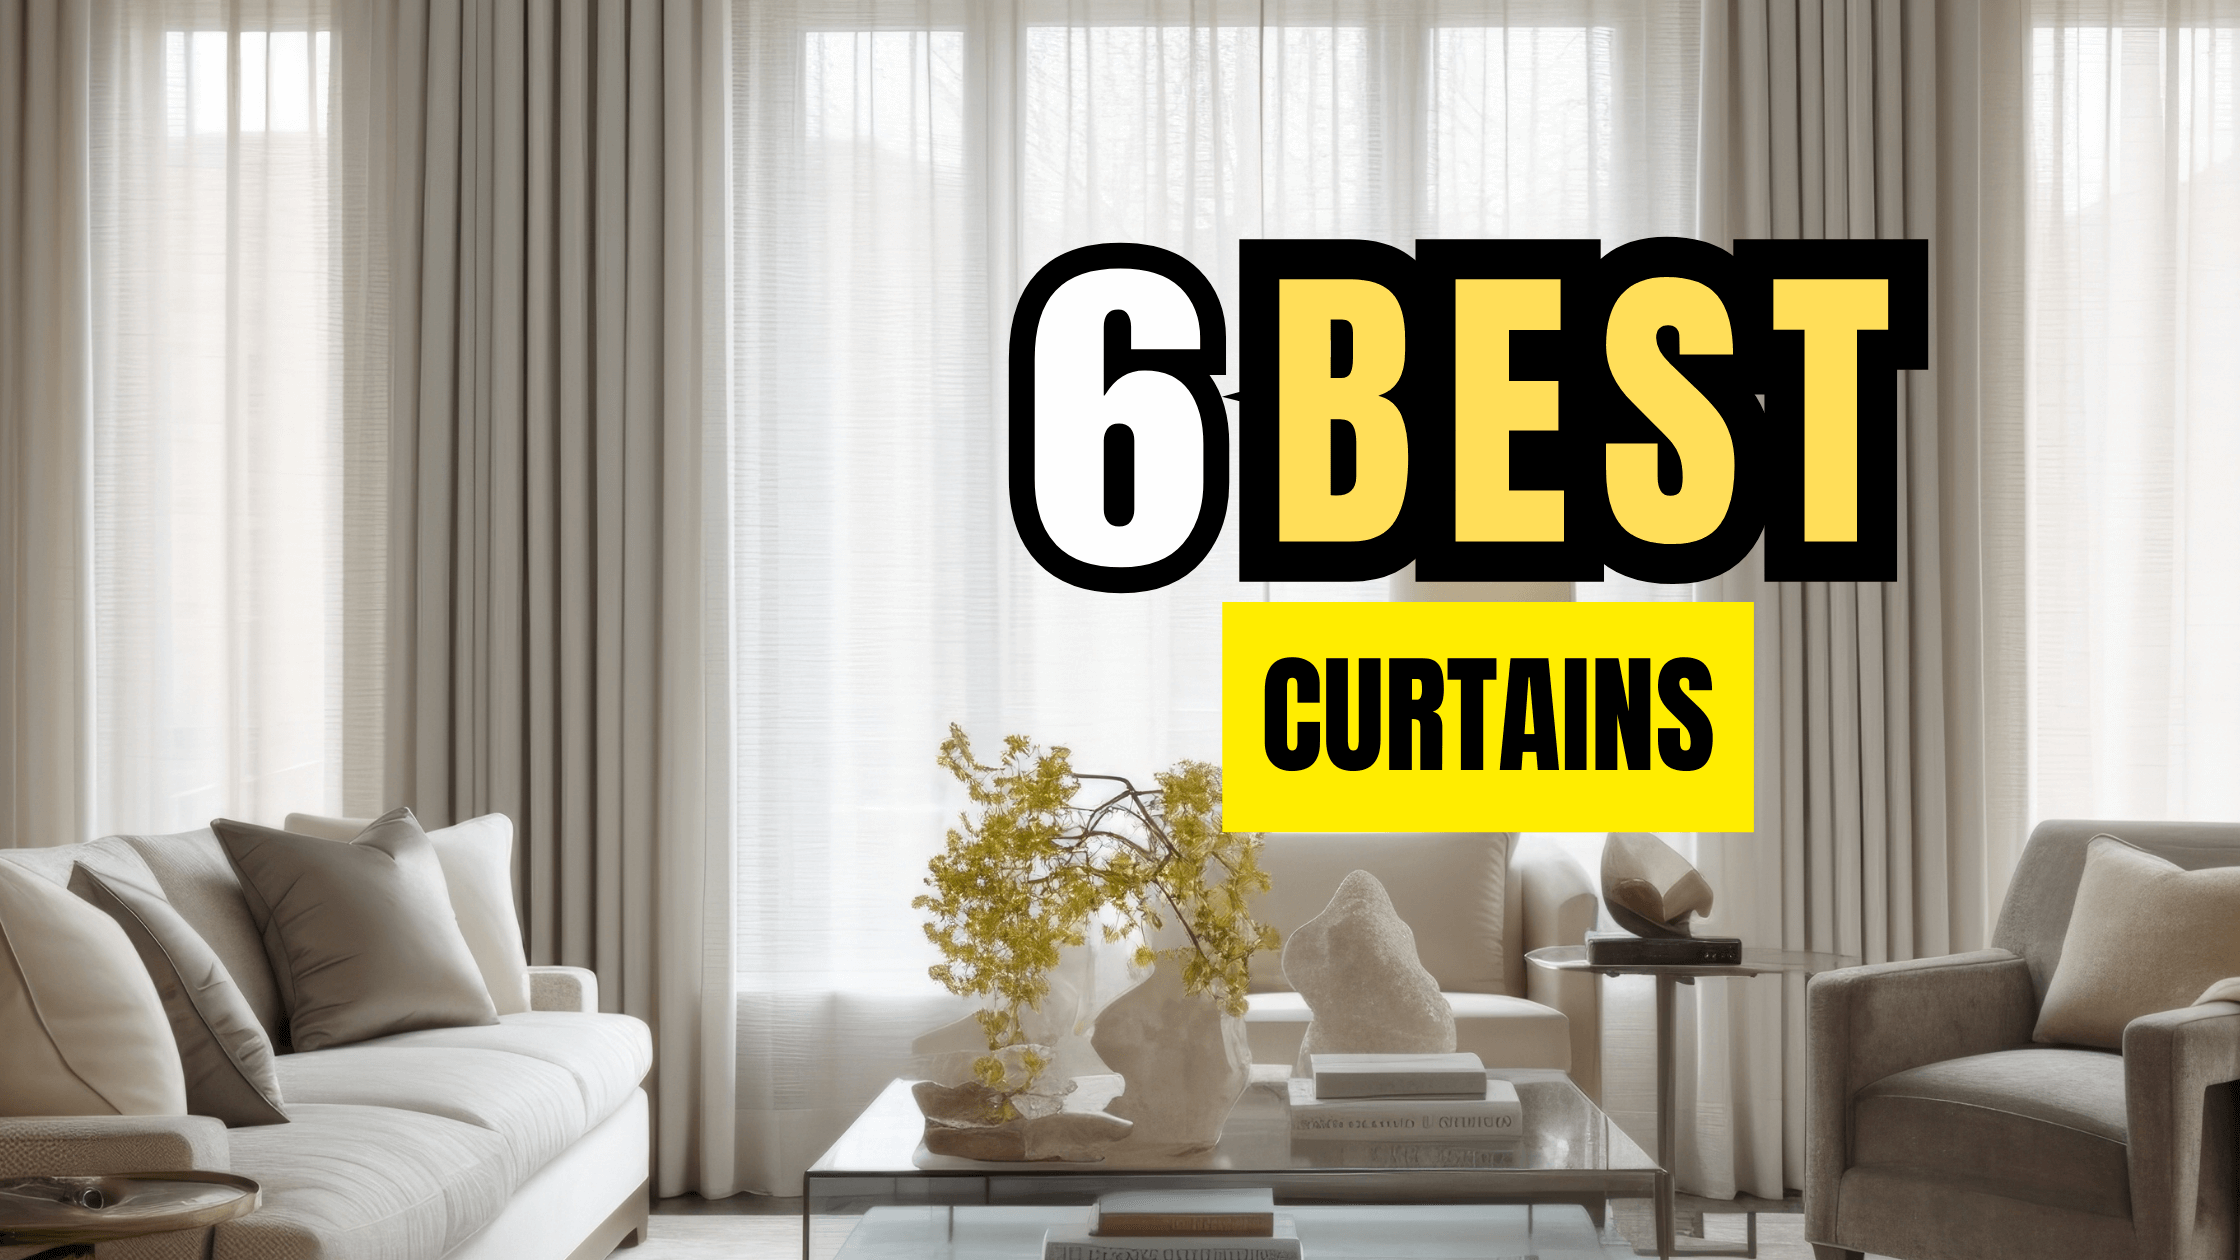 6 Best Curtains